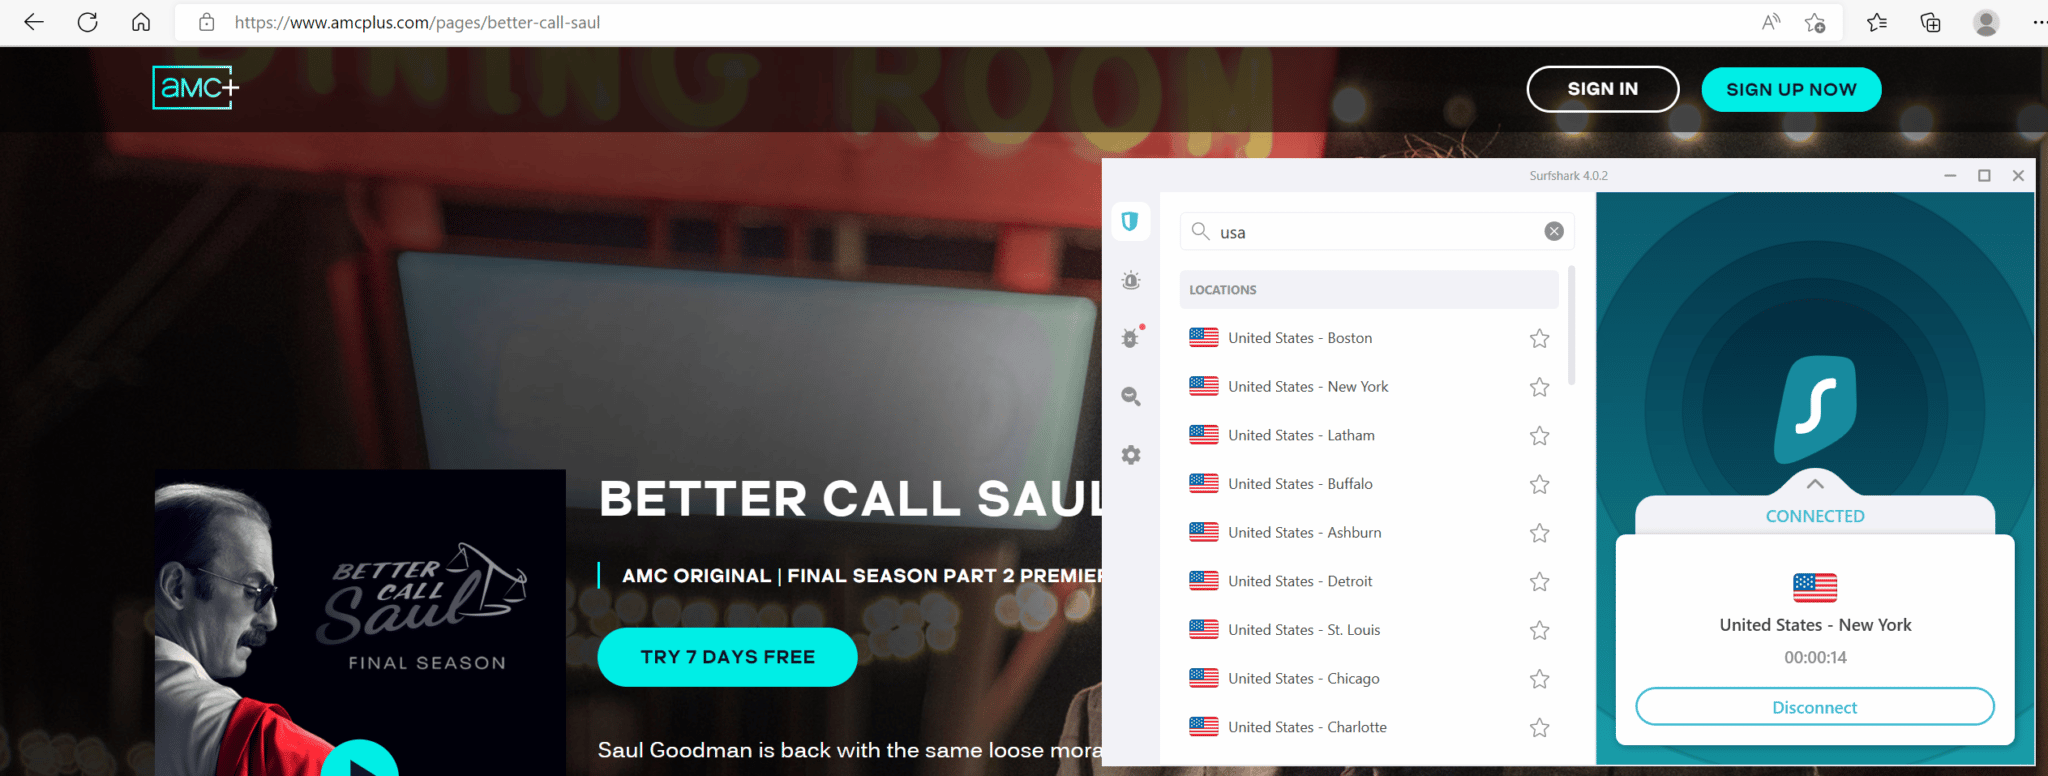 Better Call Saul AMC